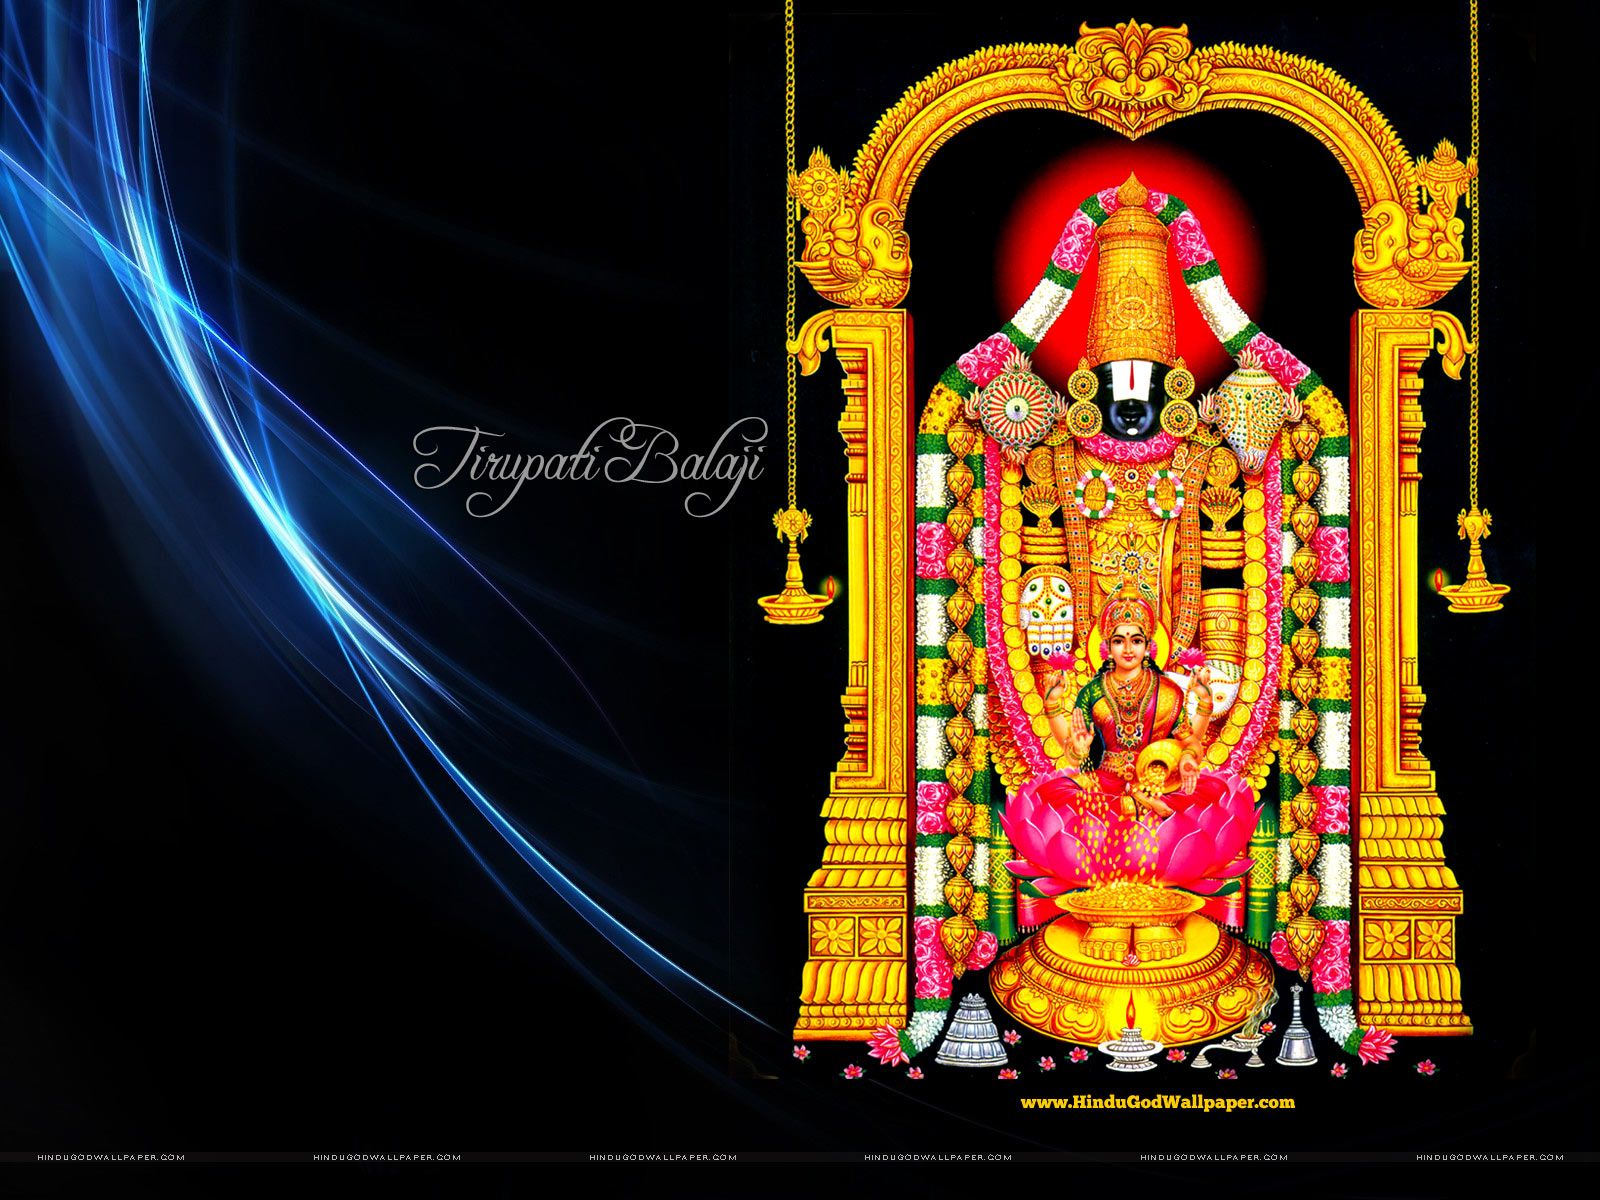 tirupati balaji live wallpaper,architecture,illustration,glass,art,shrine